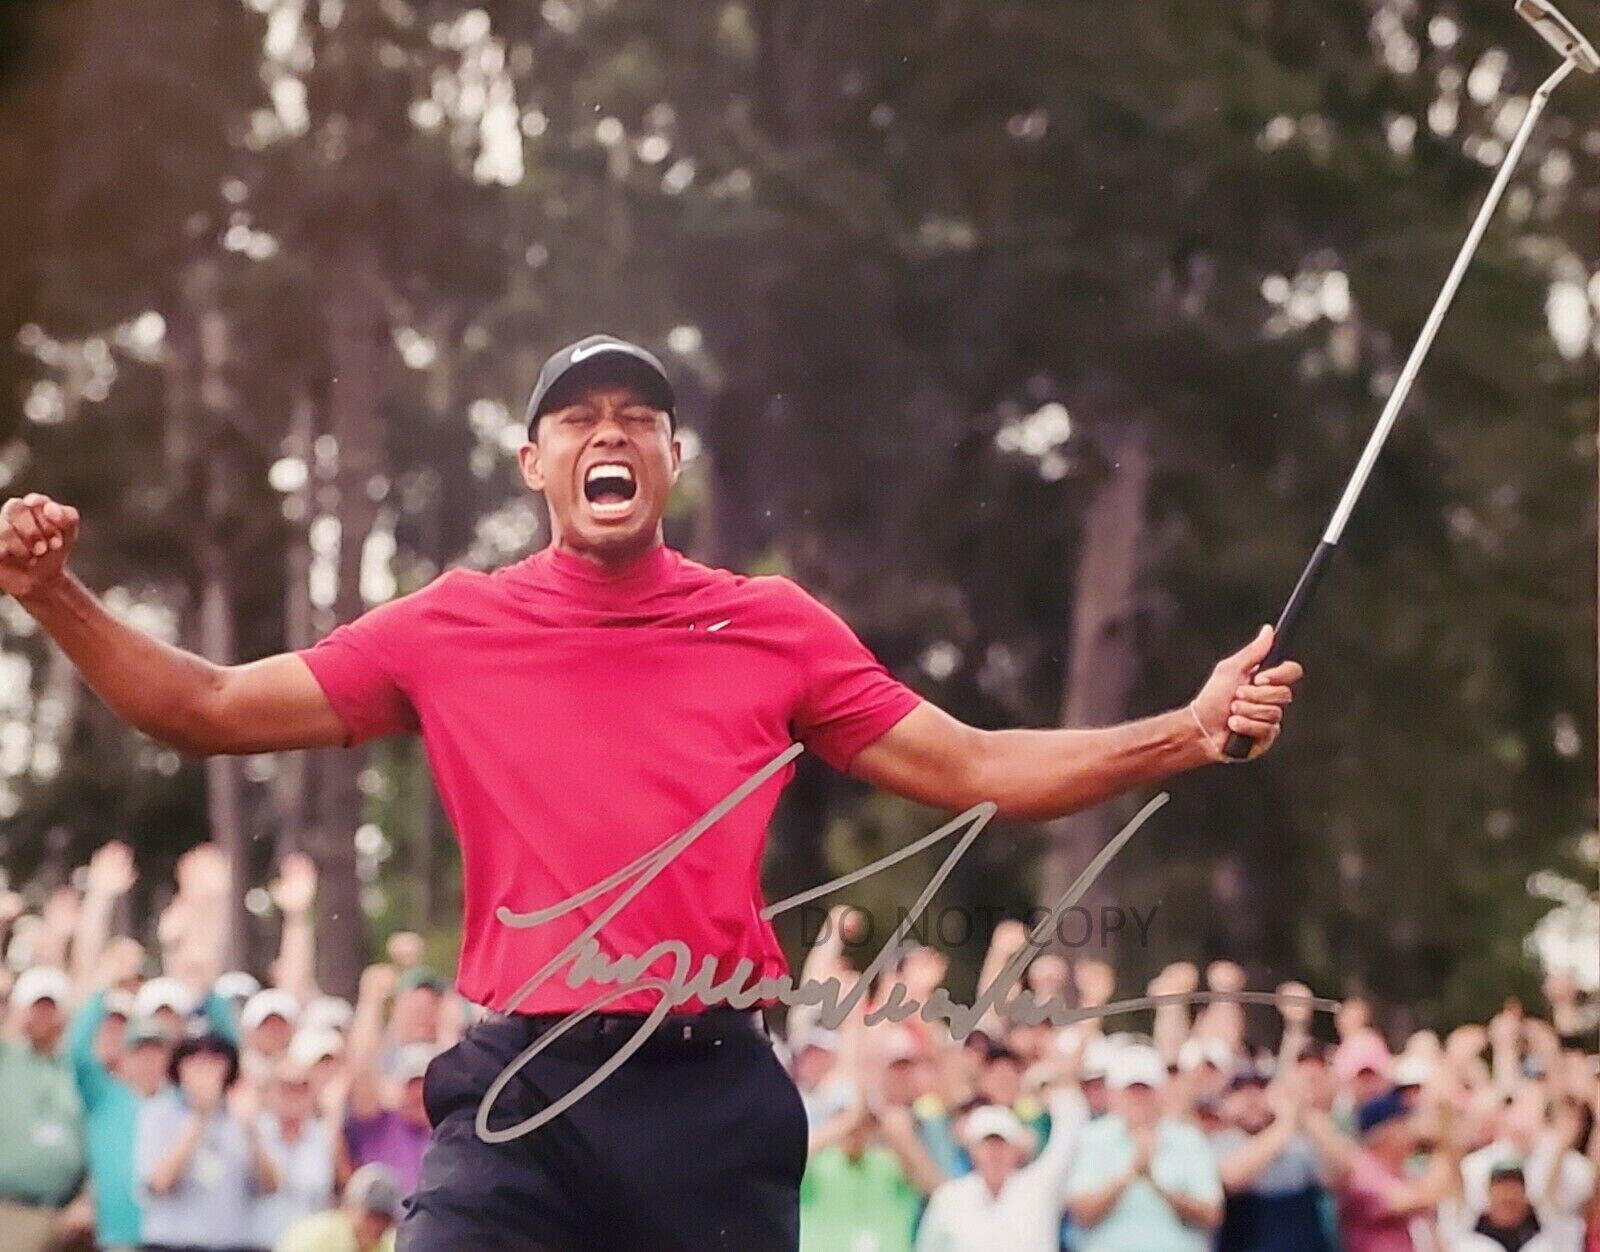 Tiger Woods Signed 8x10 Photo Poster painting Print Autograph PGA Golf Celebration REPRINT